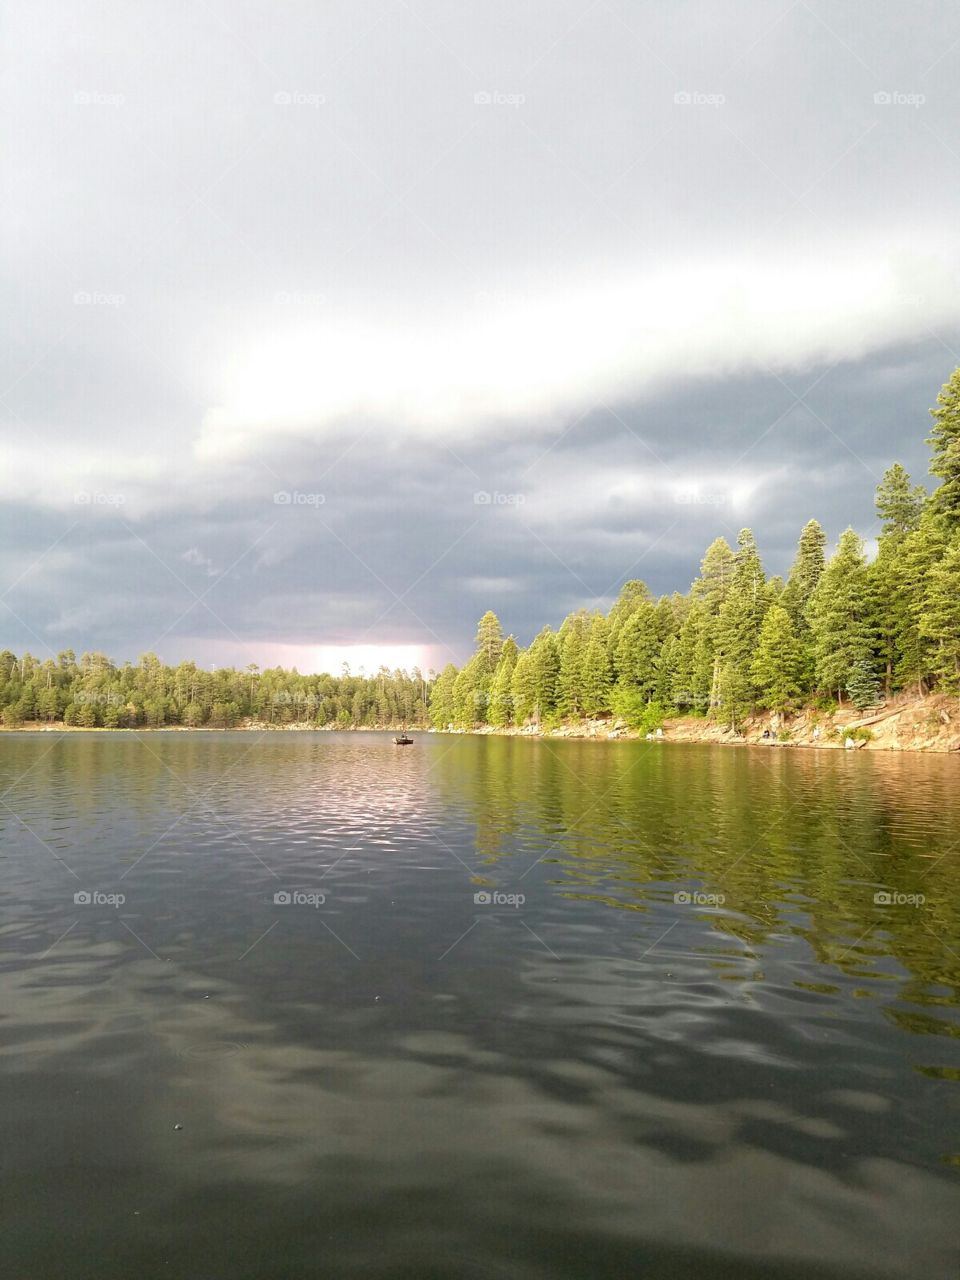 Wood's Canyon Lake